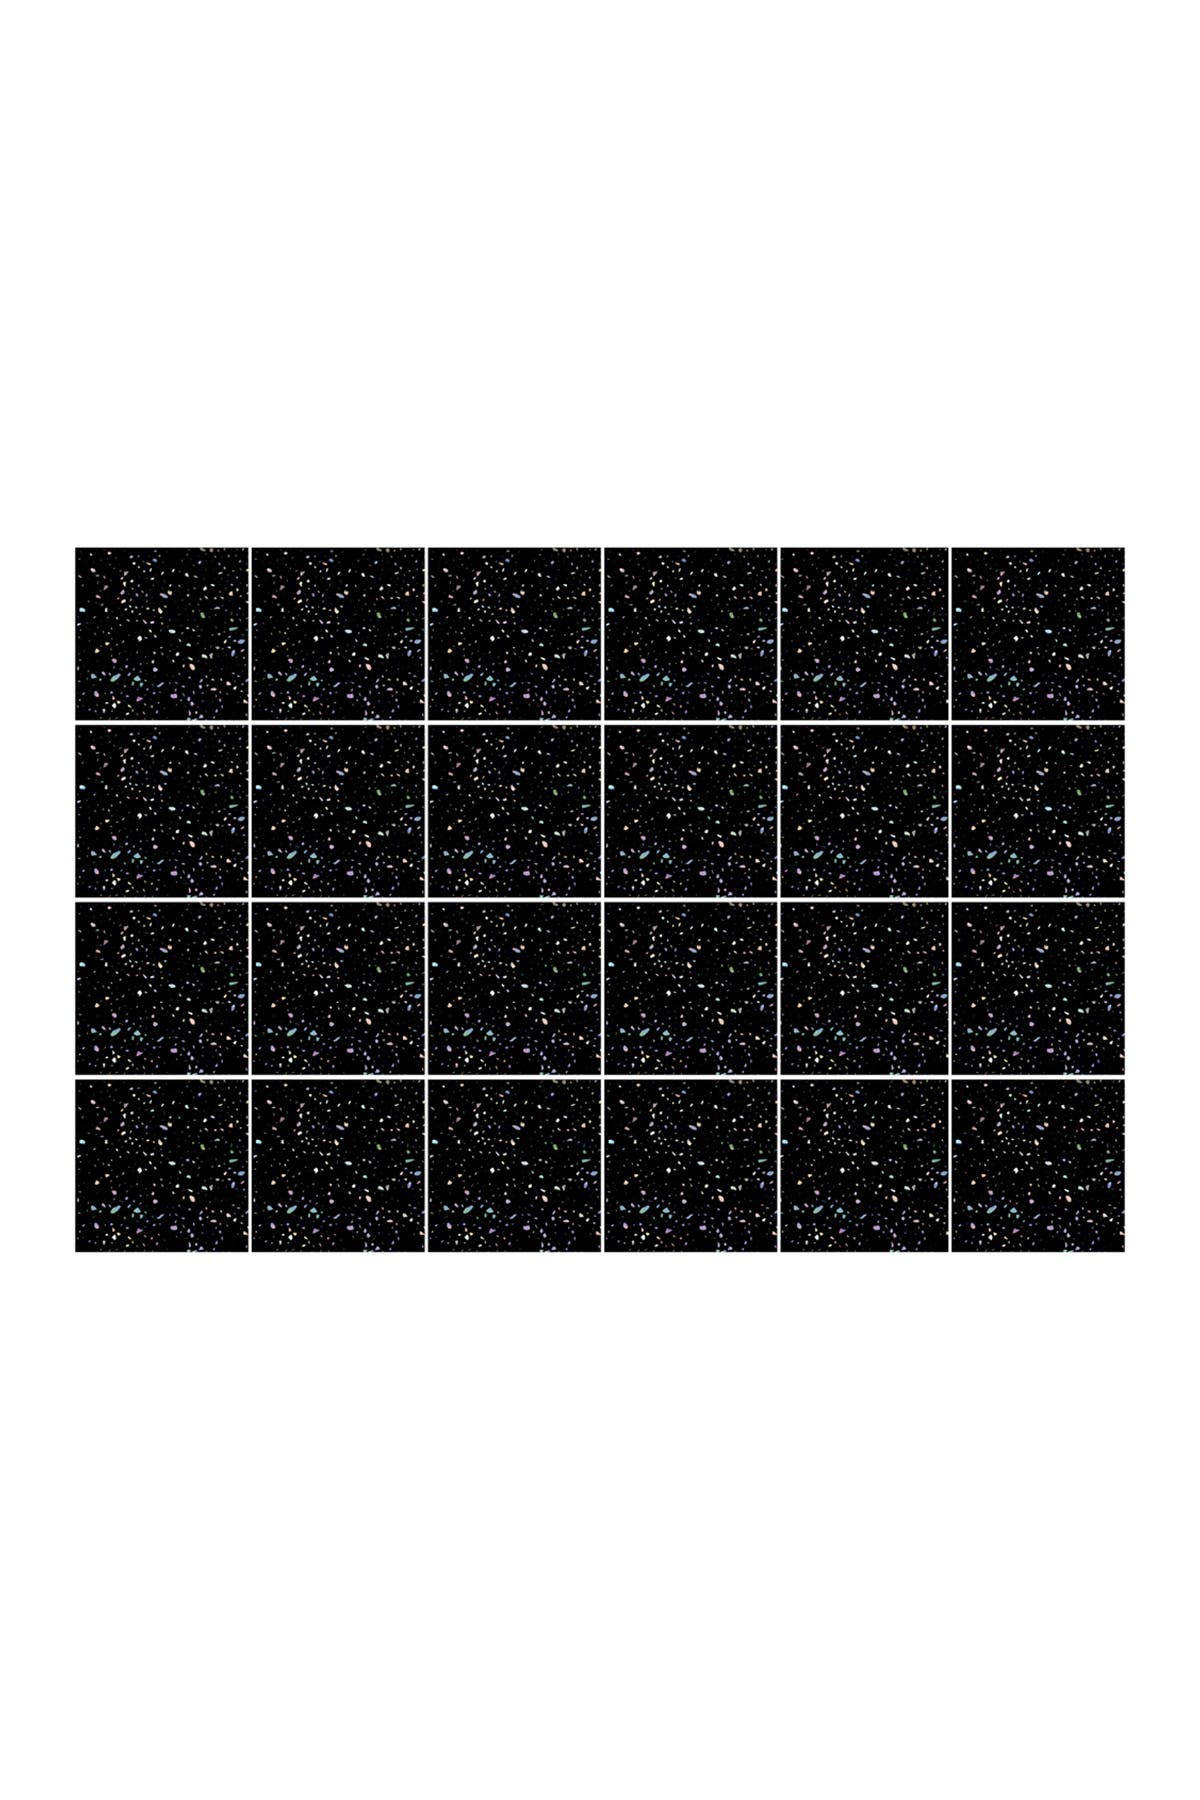 Walplus Terrazzo Holographic Glitter Black Wall Tile Sticker 24-piece Set